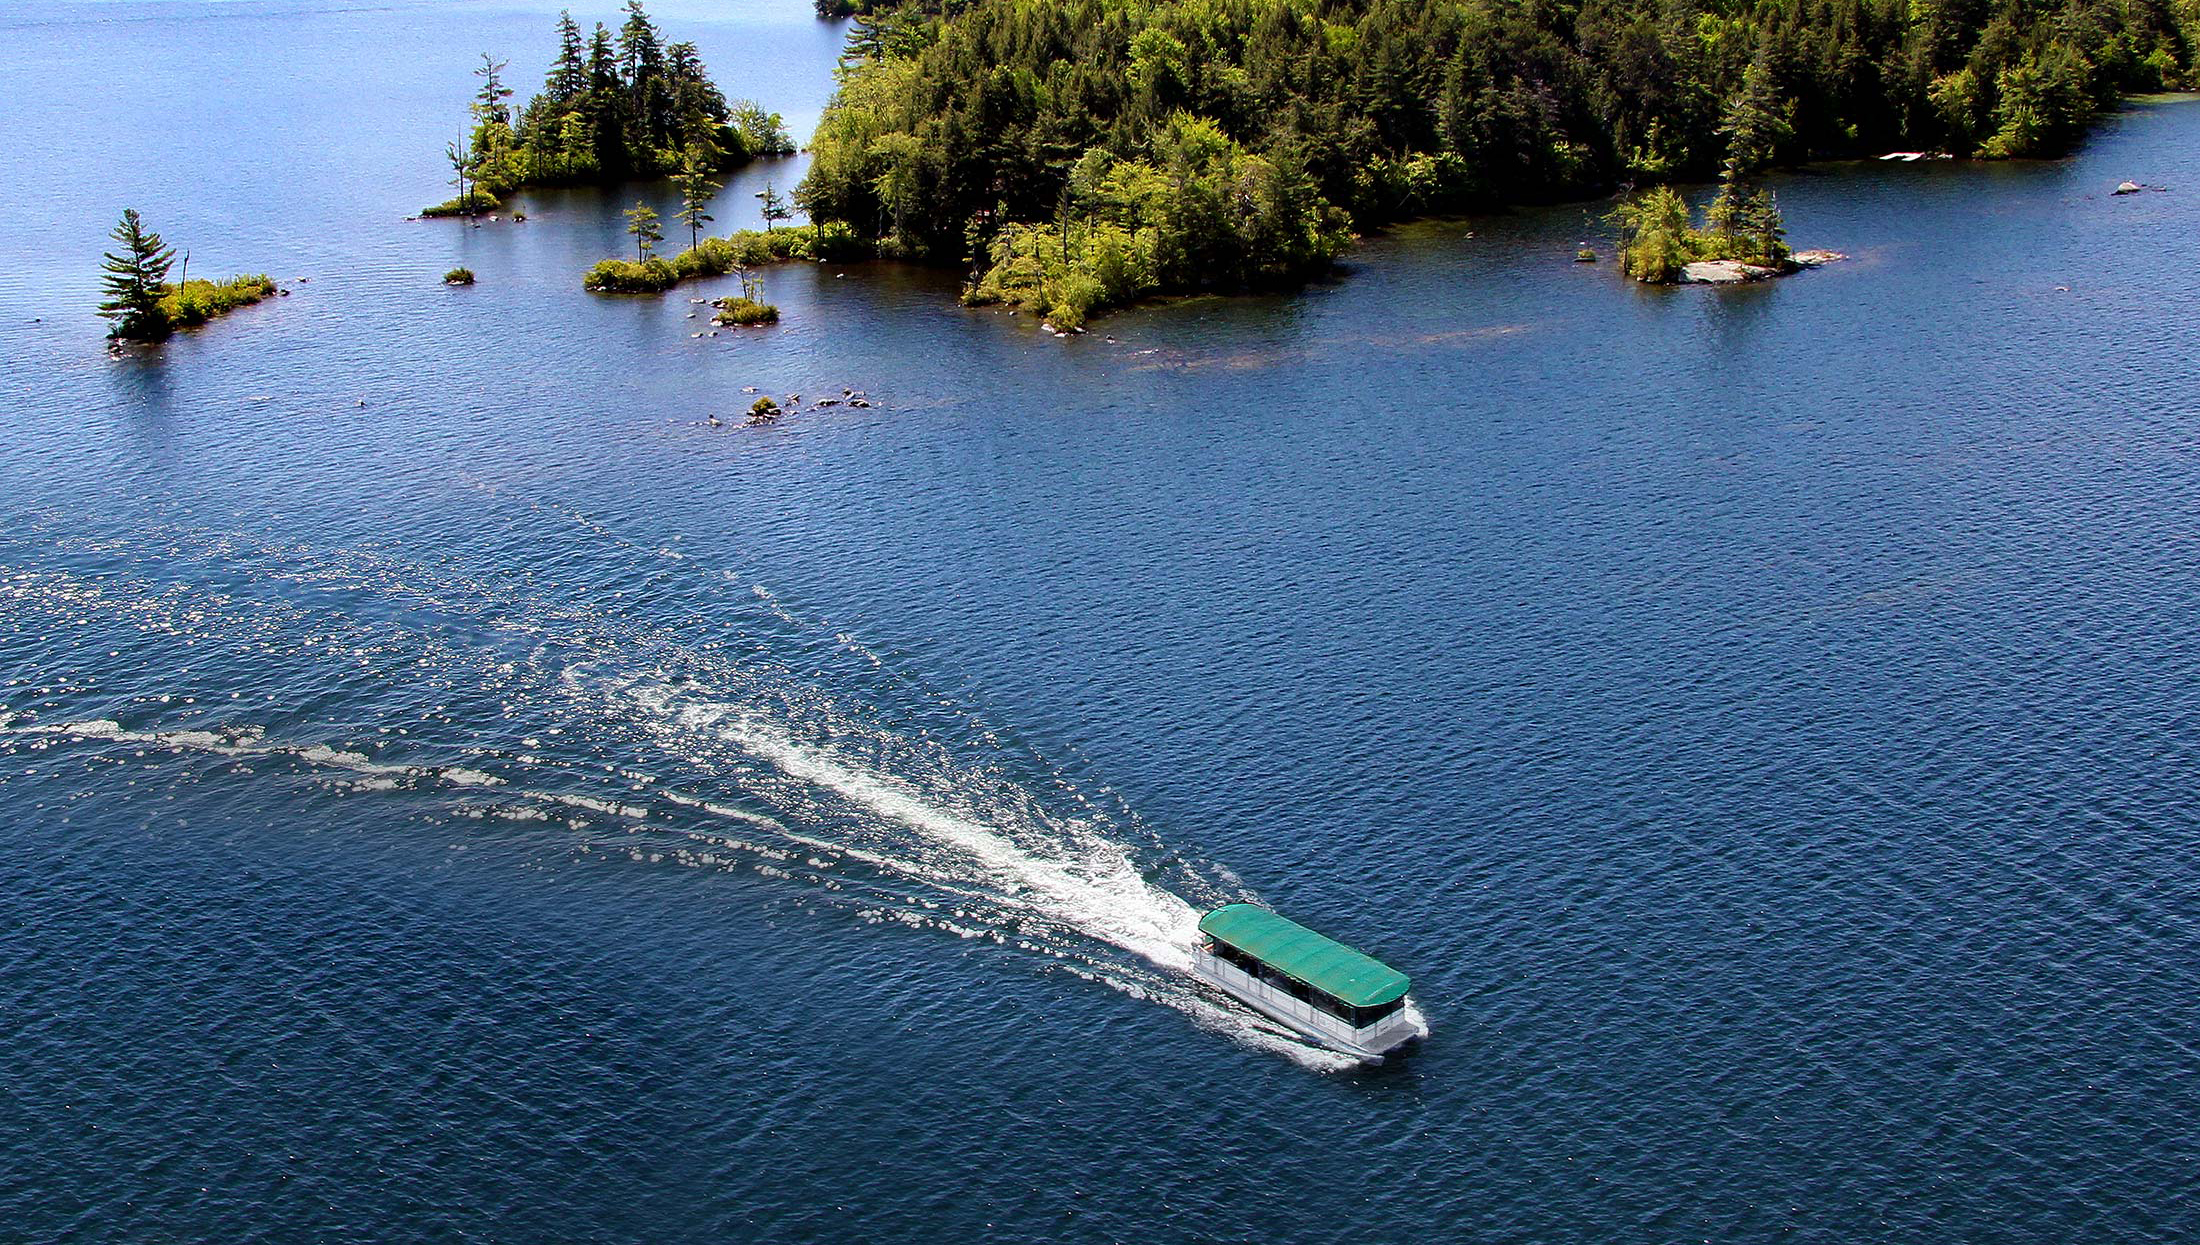 Squam Lake Cruise by Bill Hemmel